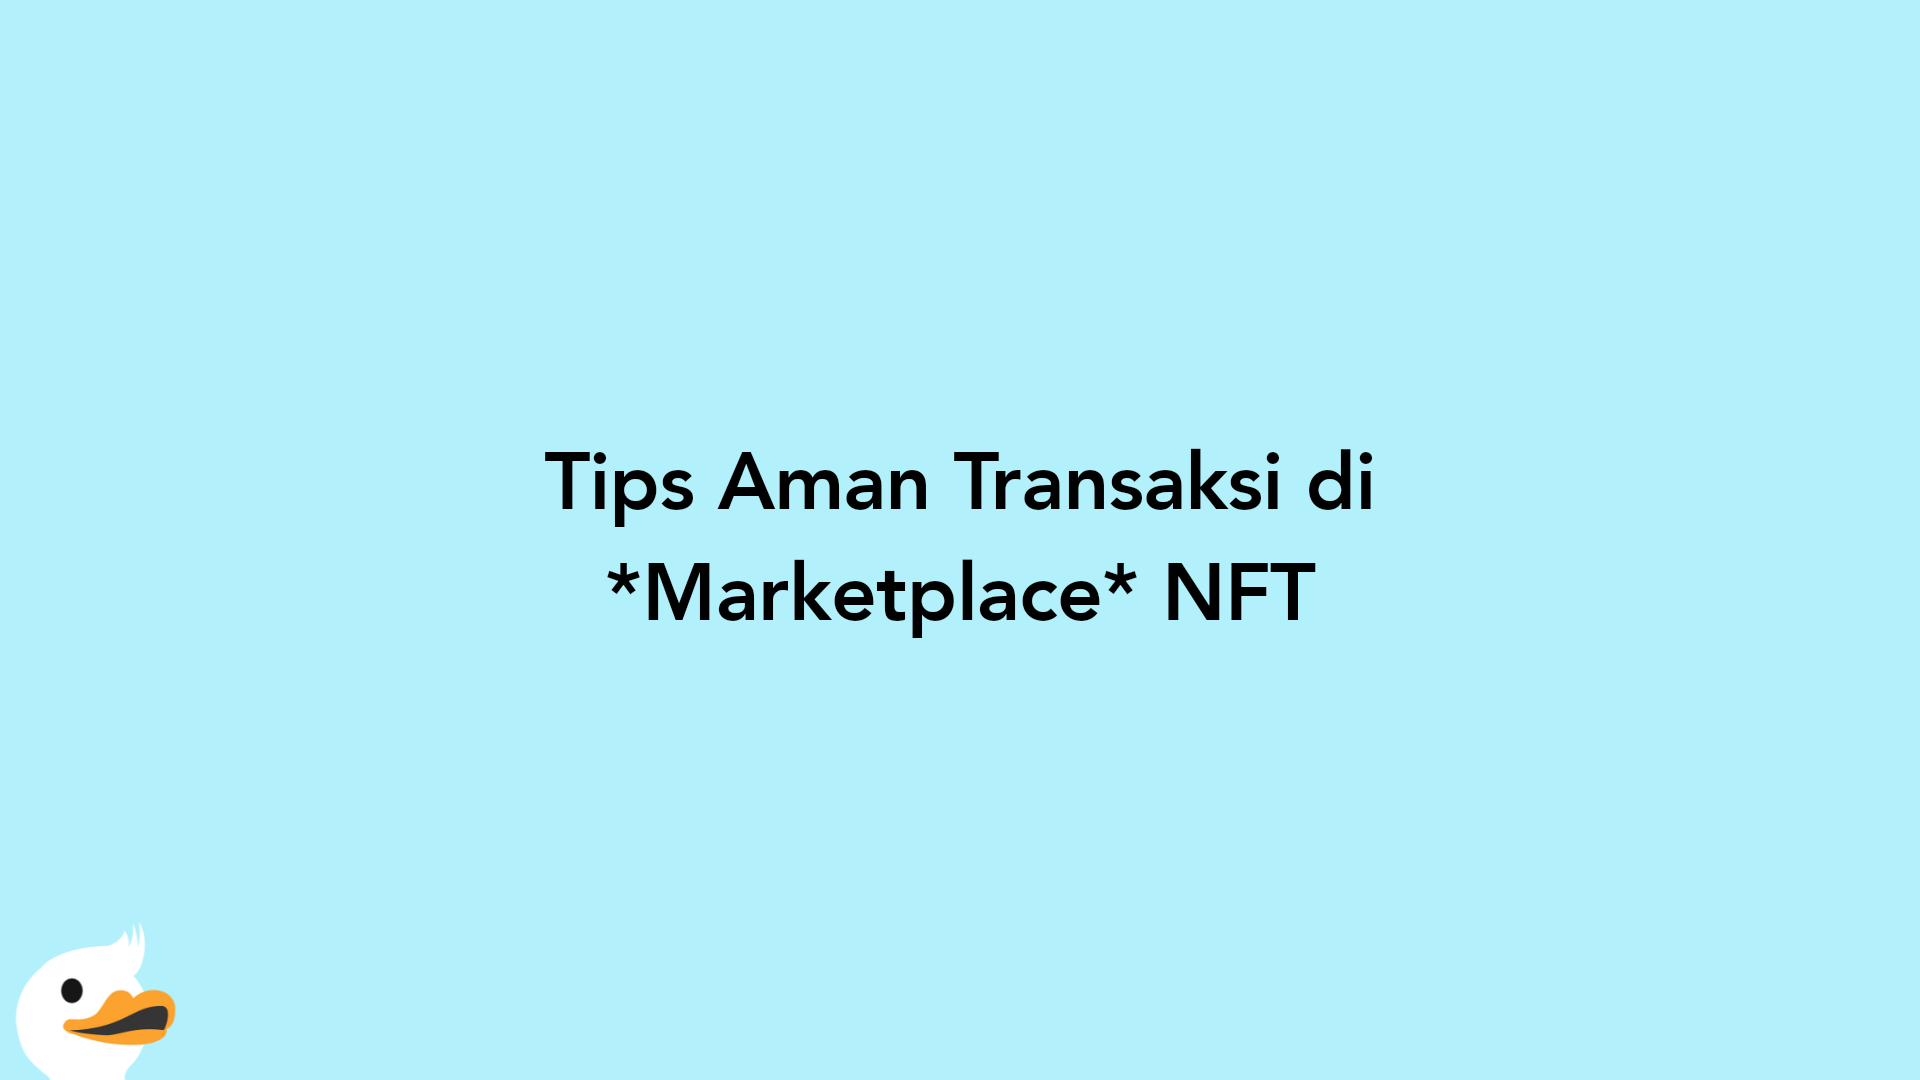 Tips Aman Transaksi di Marketplace NFT